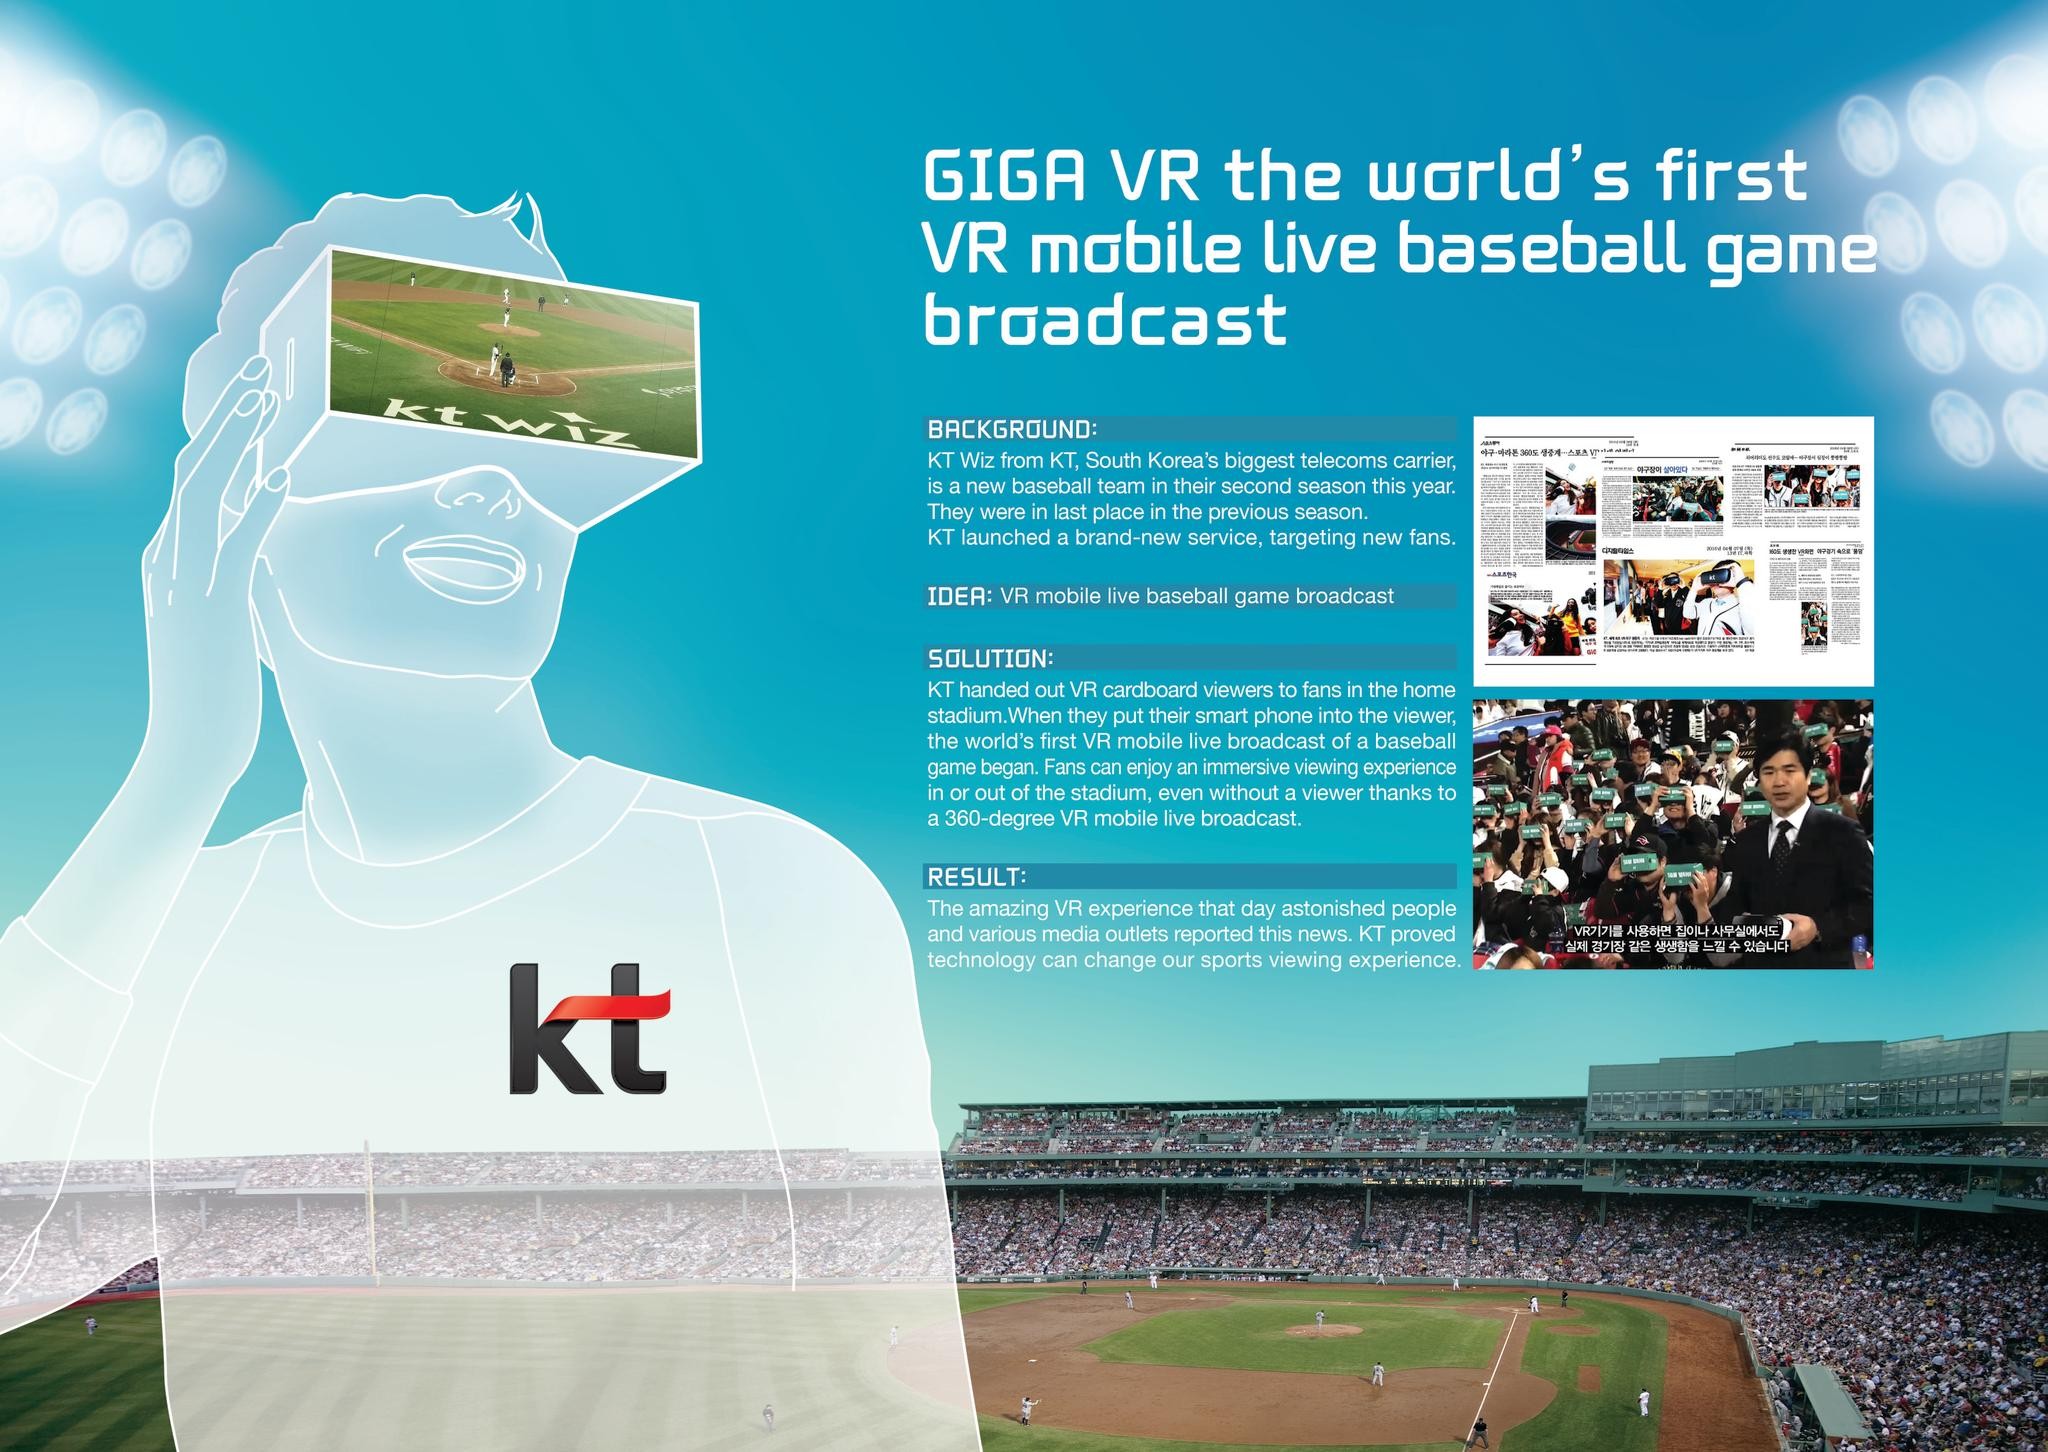 The world’s first VR mobile live baseball game broadcast, KT GiGA VR